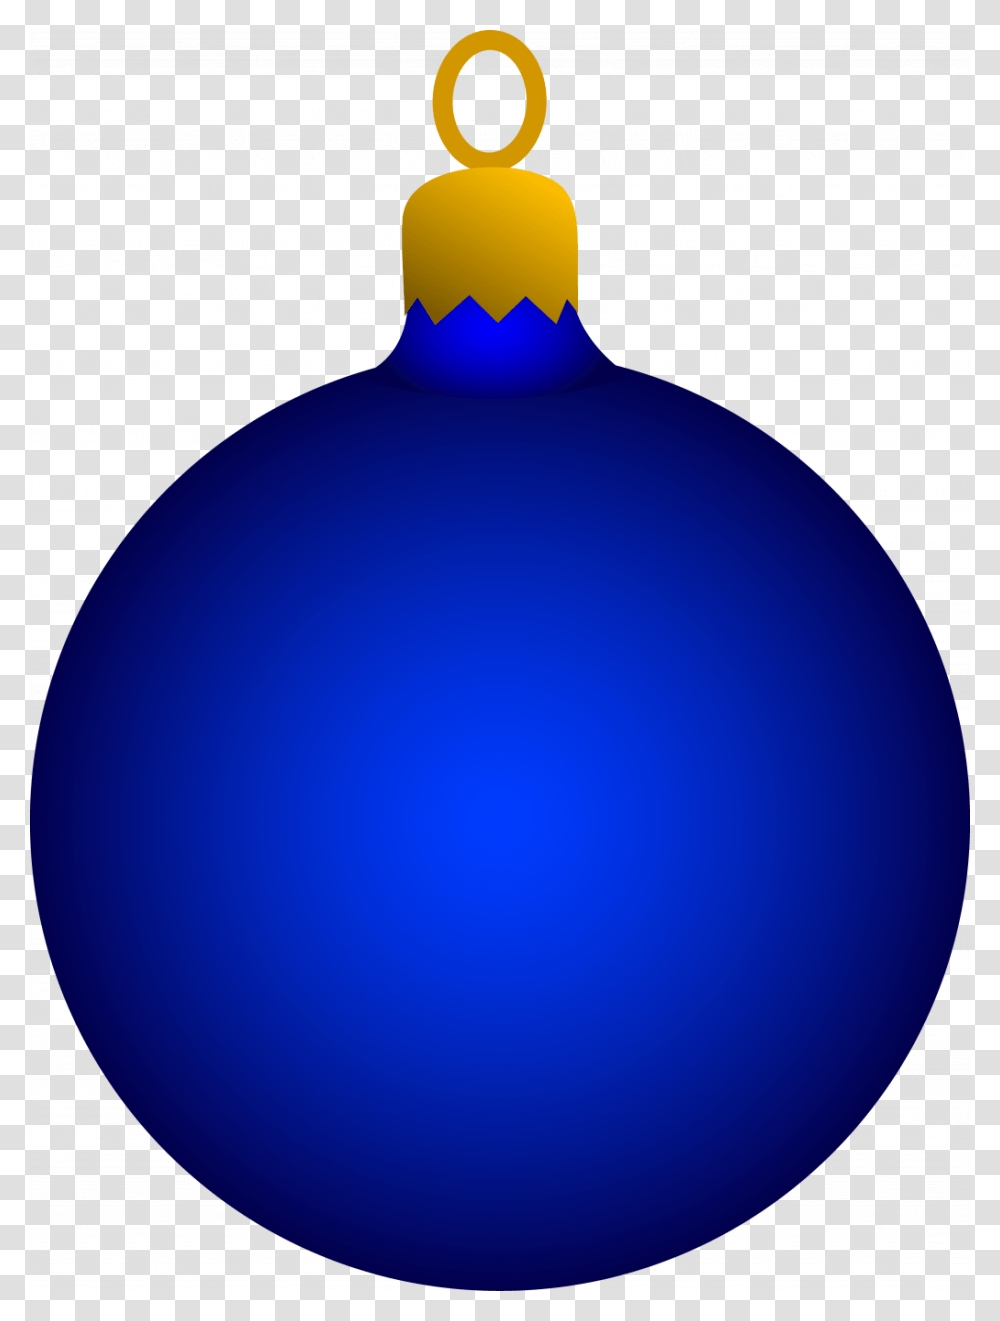 Uncategorized Blue Christmas Tree Ornament Free Clip Blue Christmas Ornament Clip Art, Balloon, Sphere, Jar, Vase Transparent Png